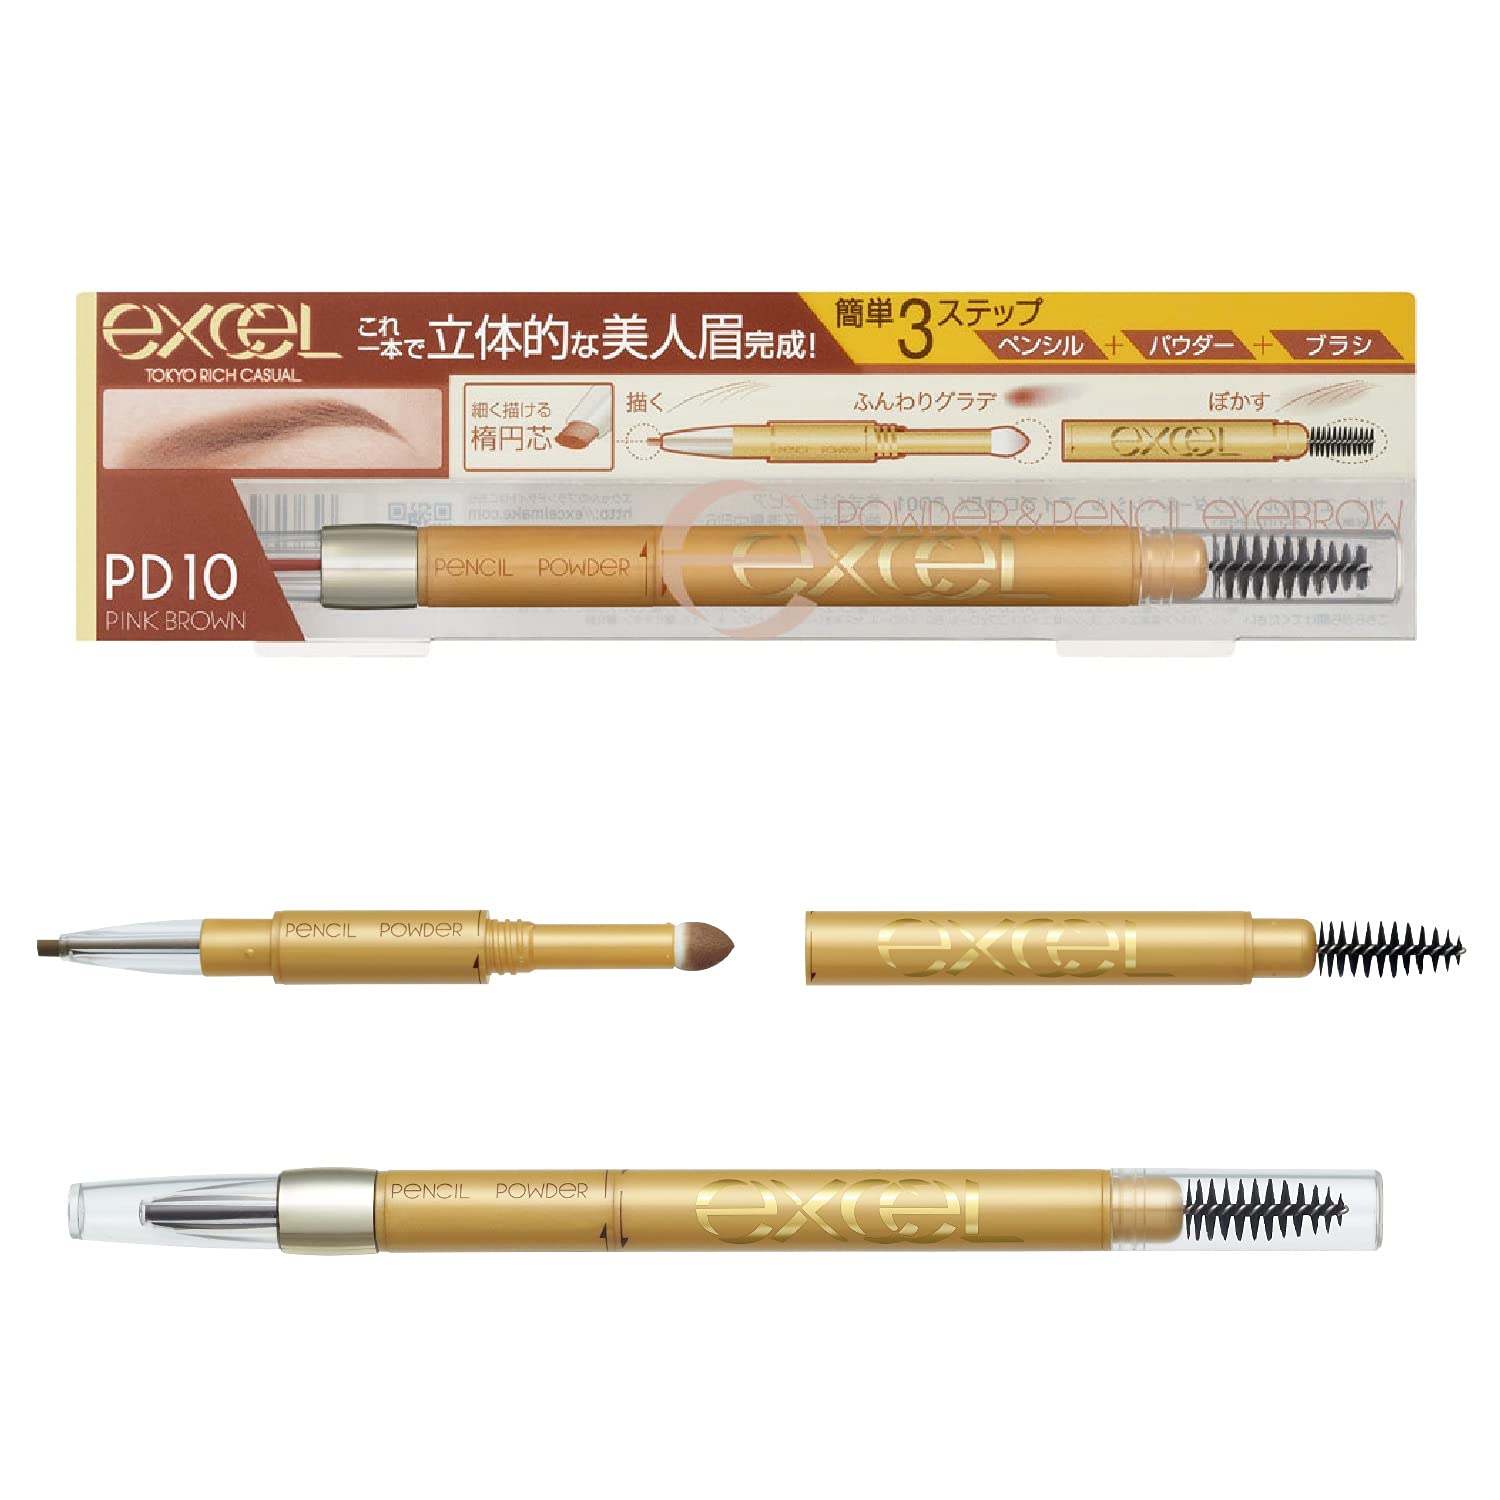 Excel Powder & Pencil Eyebrow EX PD10 (Pink Brown) 3 - in - 1 - Buy Eyebrown From Japan